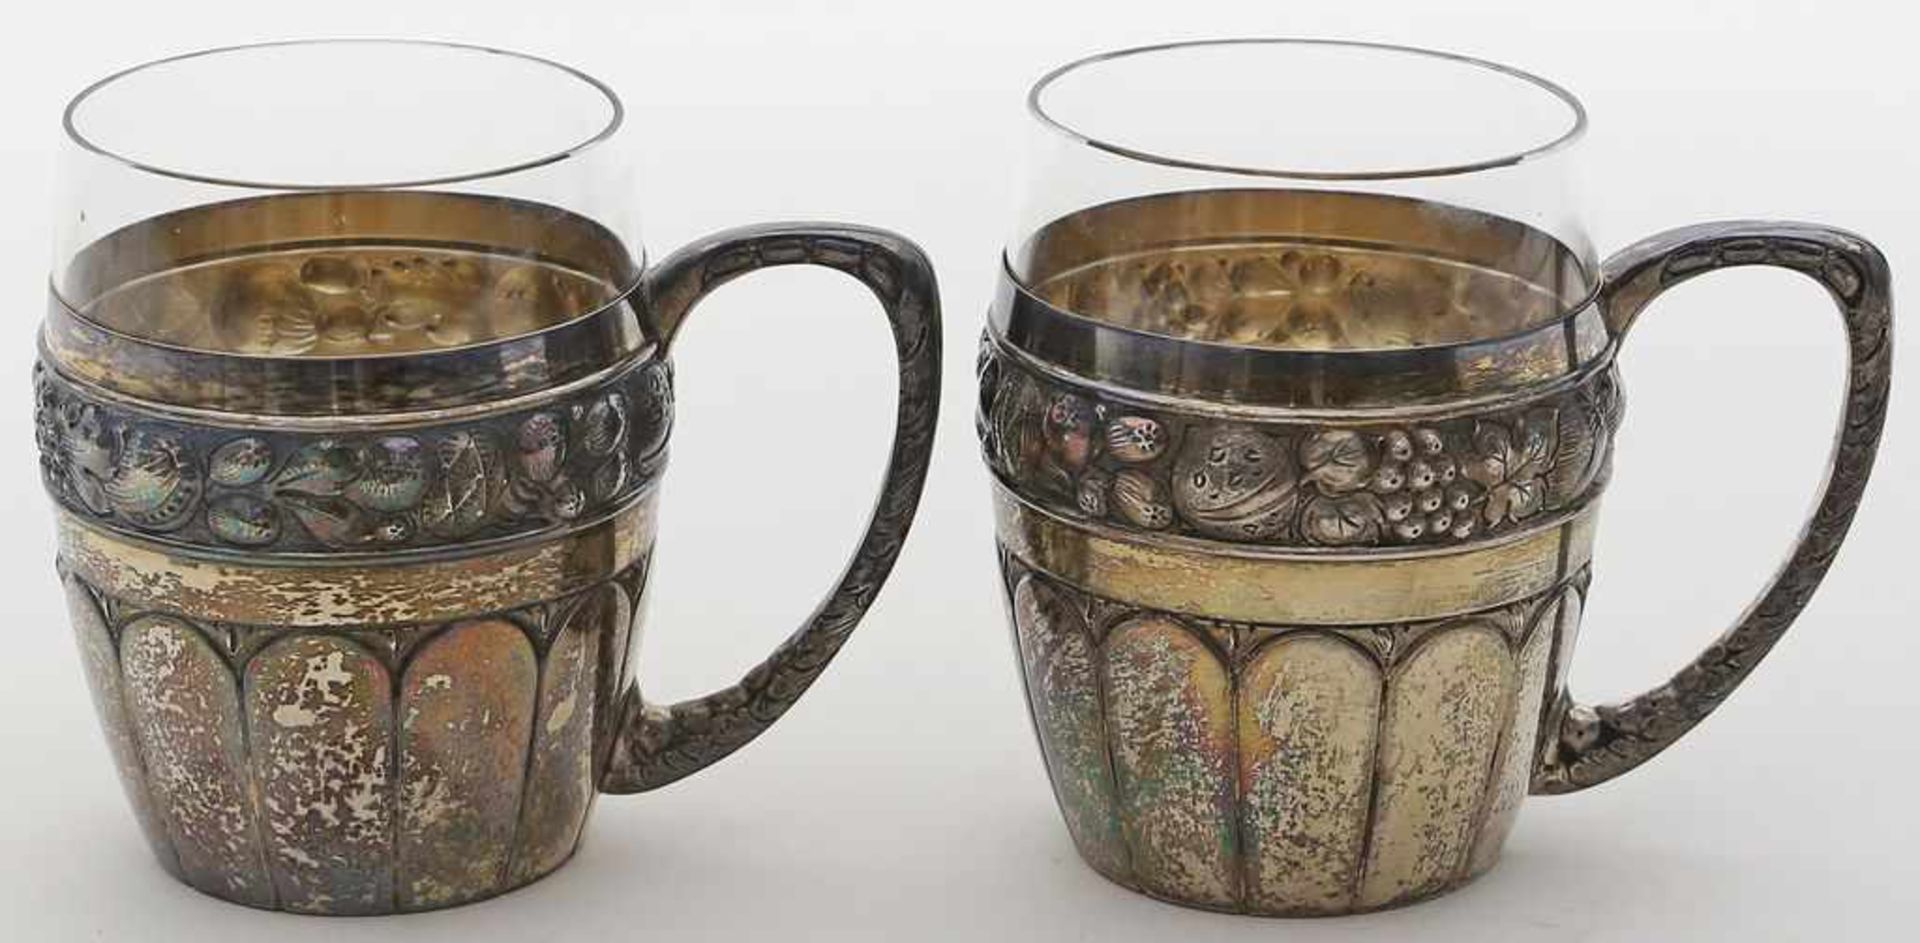 Paar Art Deco-Teeglashalter.800/000 Silber, 176 g, Innenvergoldung. Wandungen teils mit